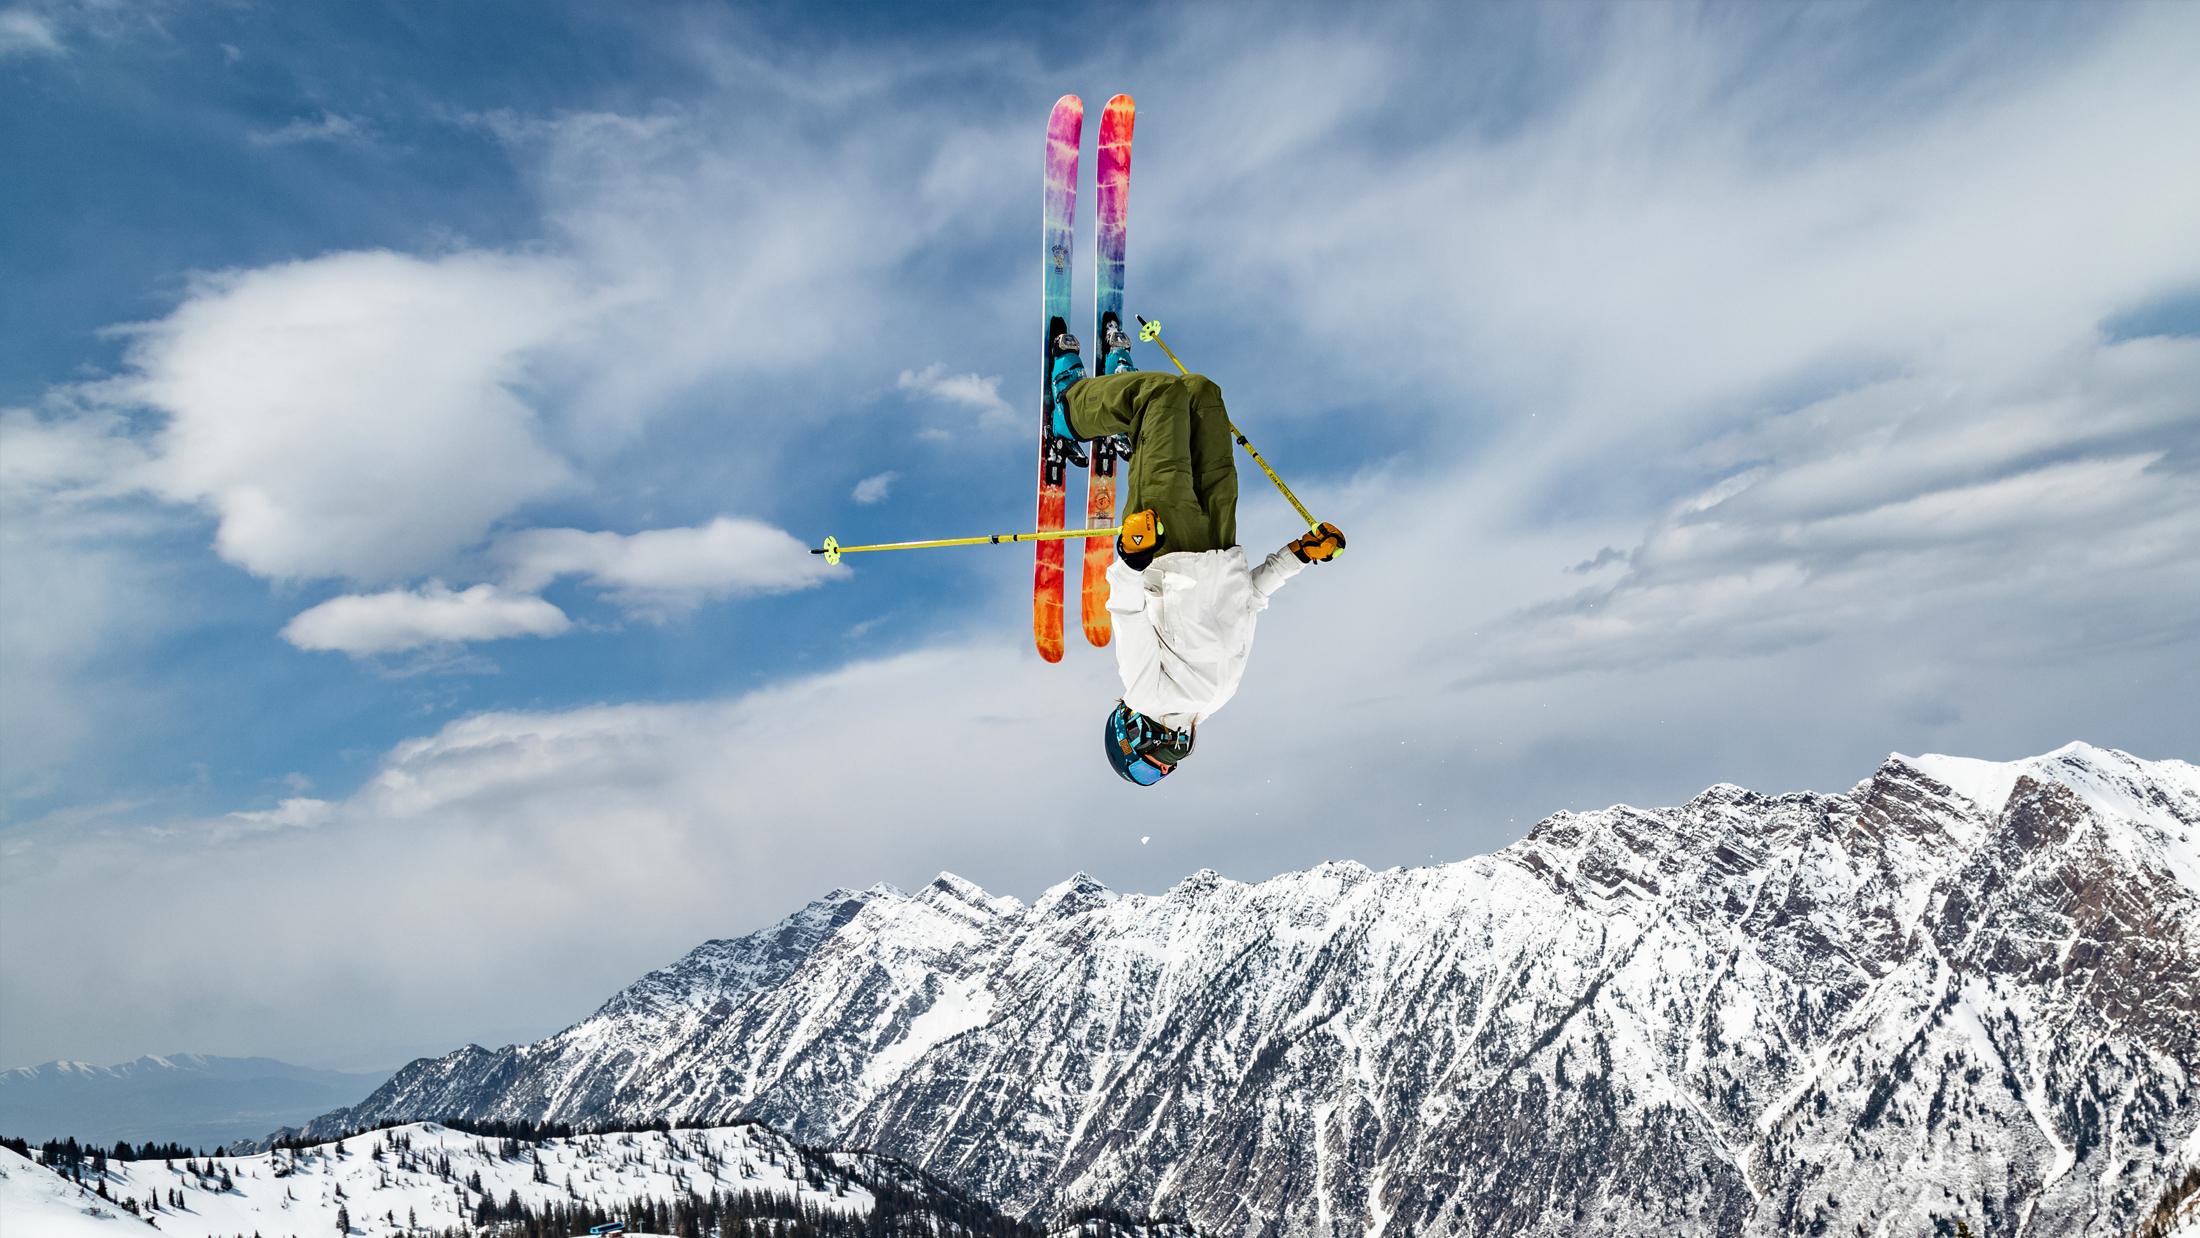 The Hotshot "PEACEOUT" Limited Edition Ski Shredding Image